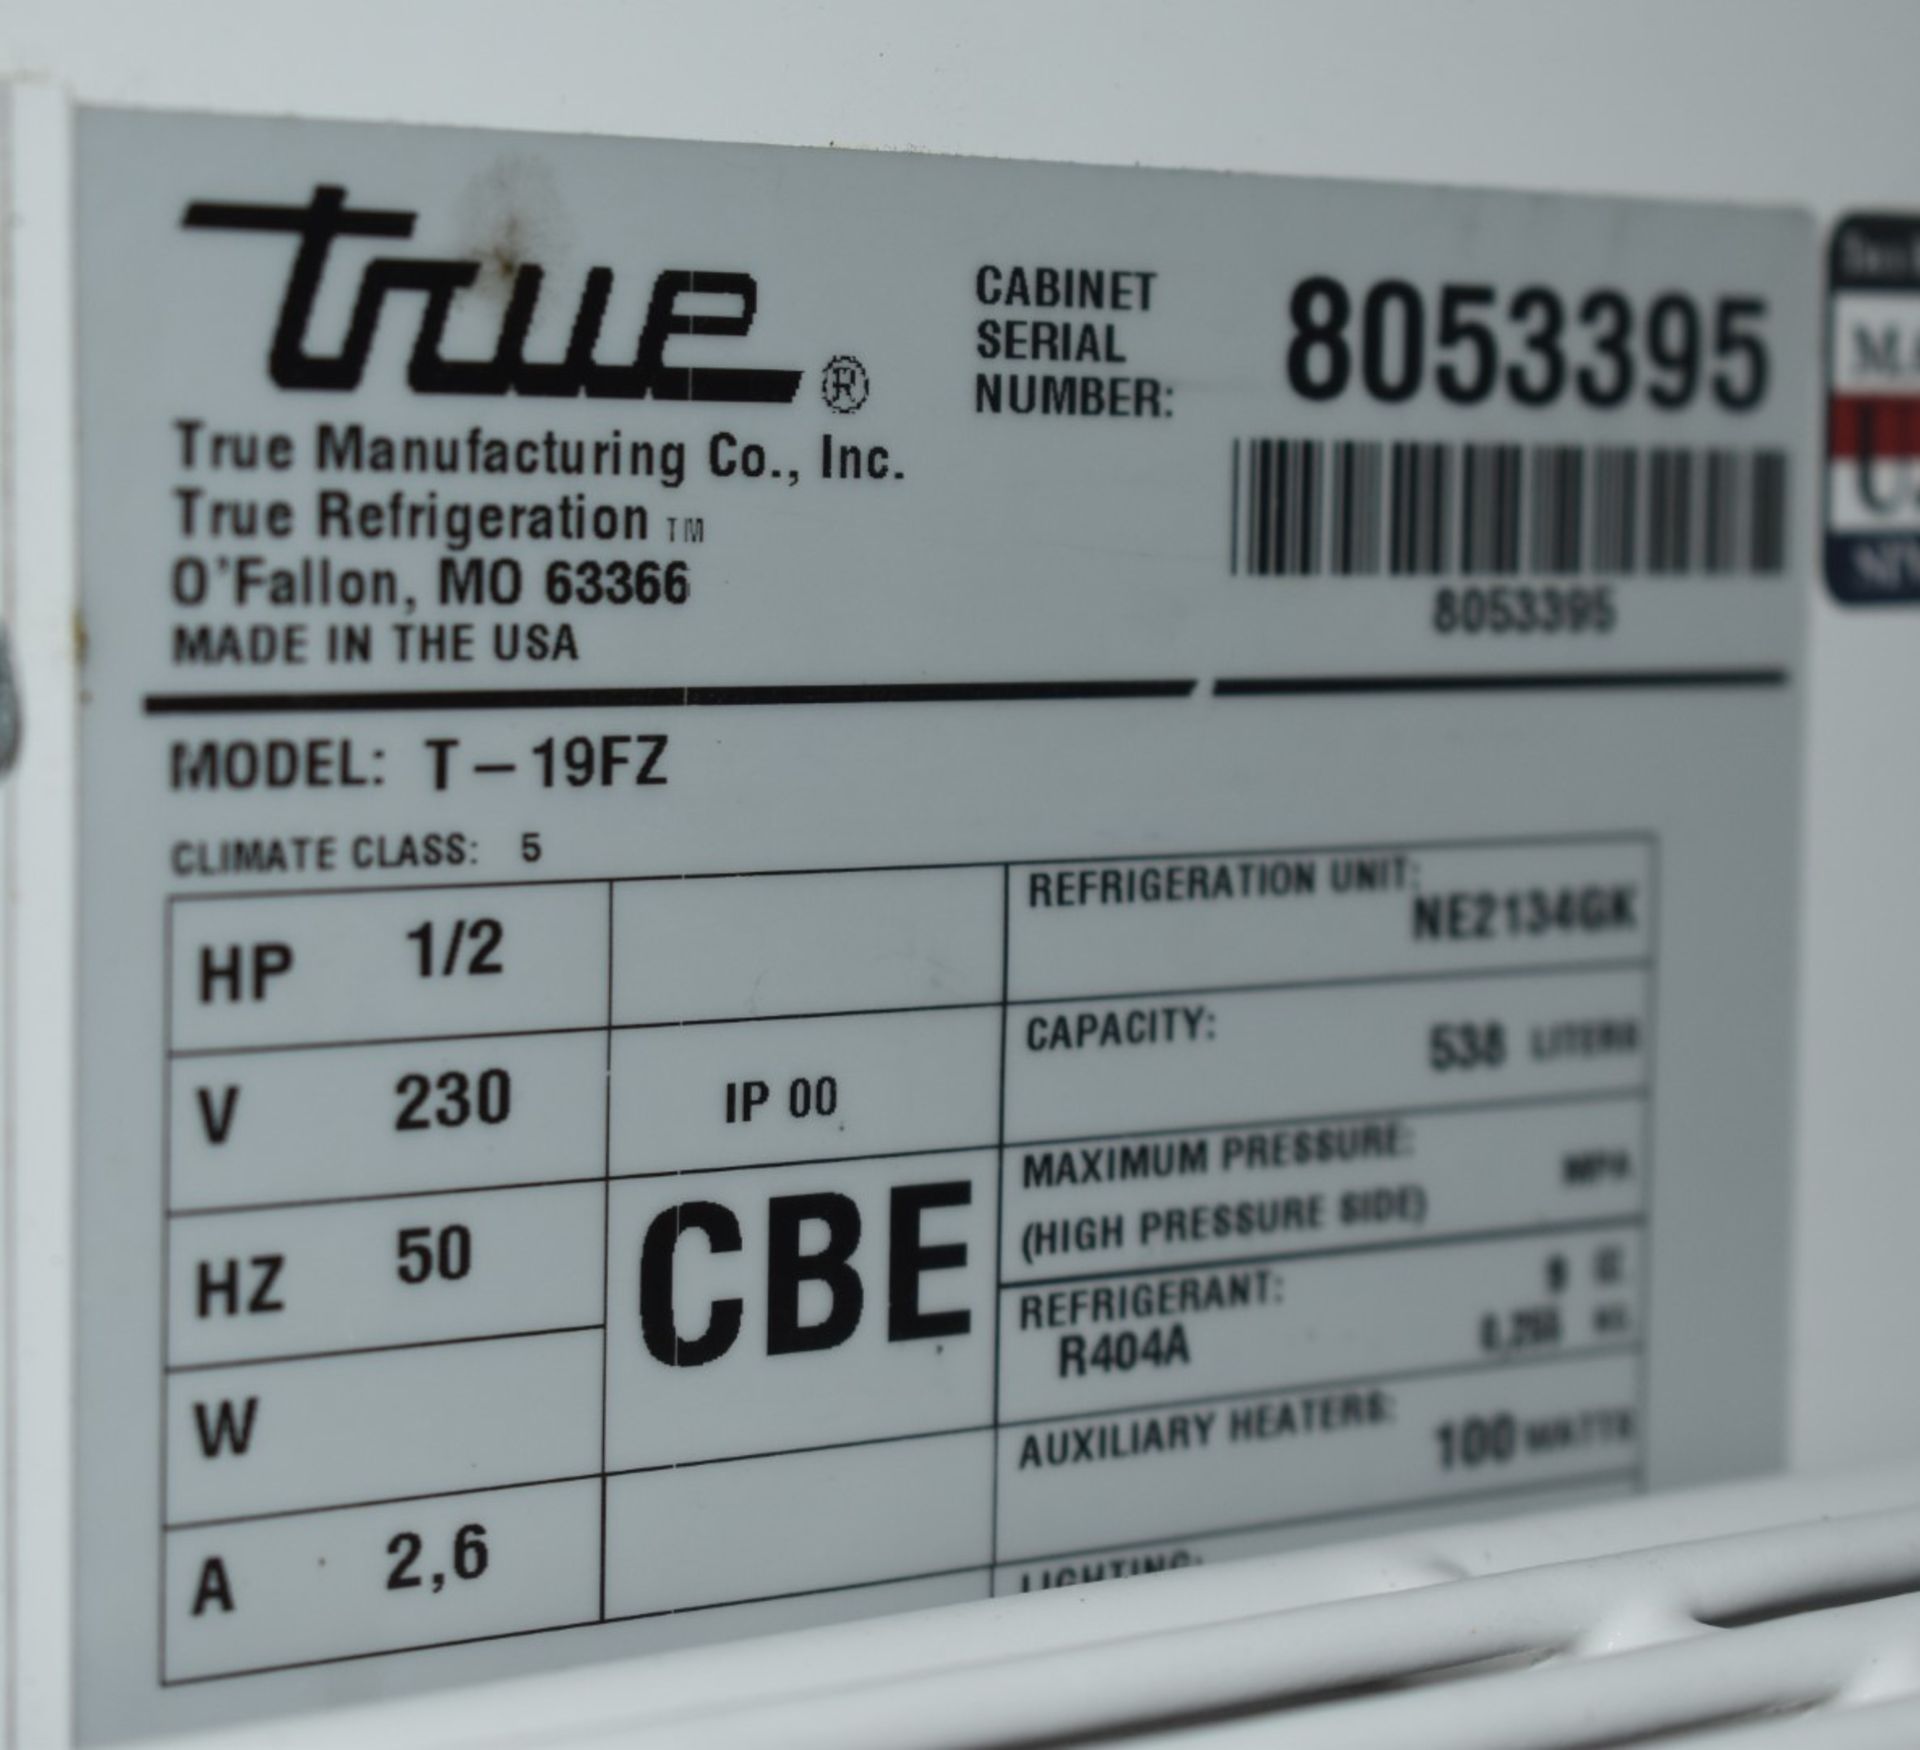 1 x True T-19FZ Upright Single Solid Door Freezer - Stainless Steel Finish With Aluminium Interior - - Image 5 of 9